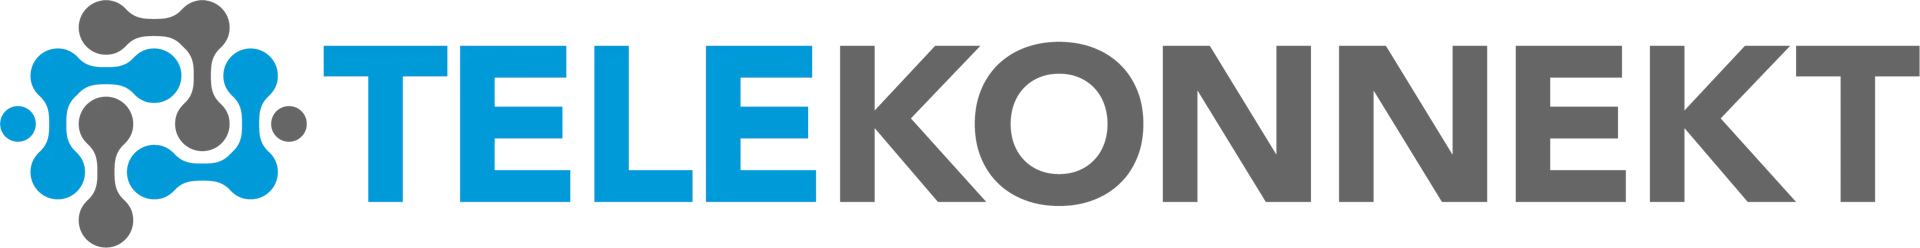 telekonnekt logo